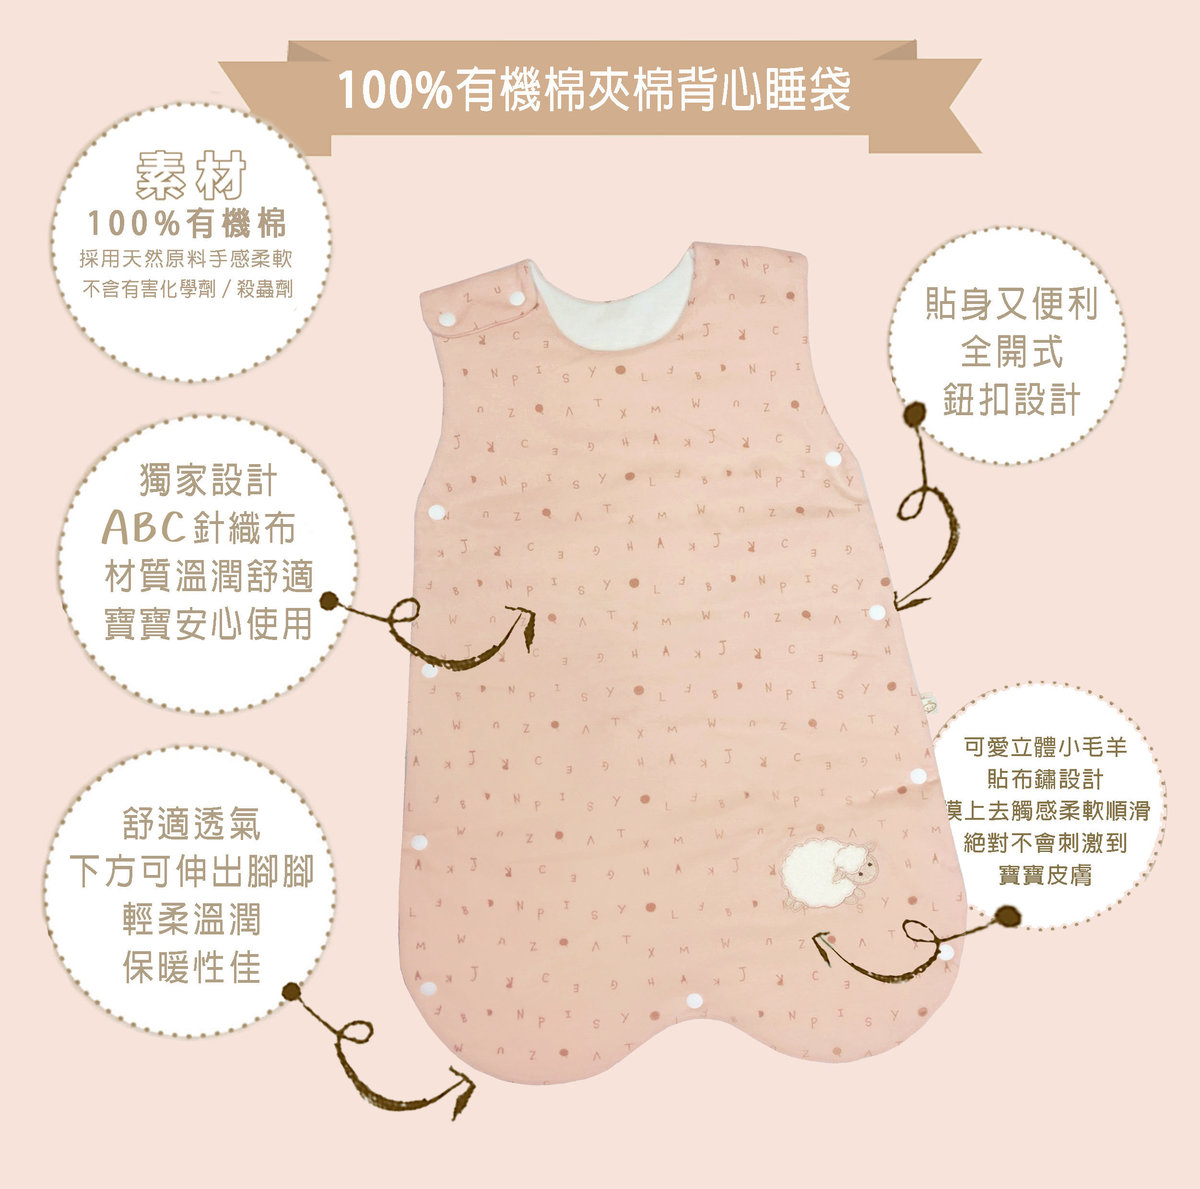 100% Certified Organic Cotton Padded Baby Sleeping Vest / Sleeping Bag